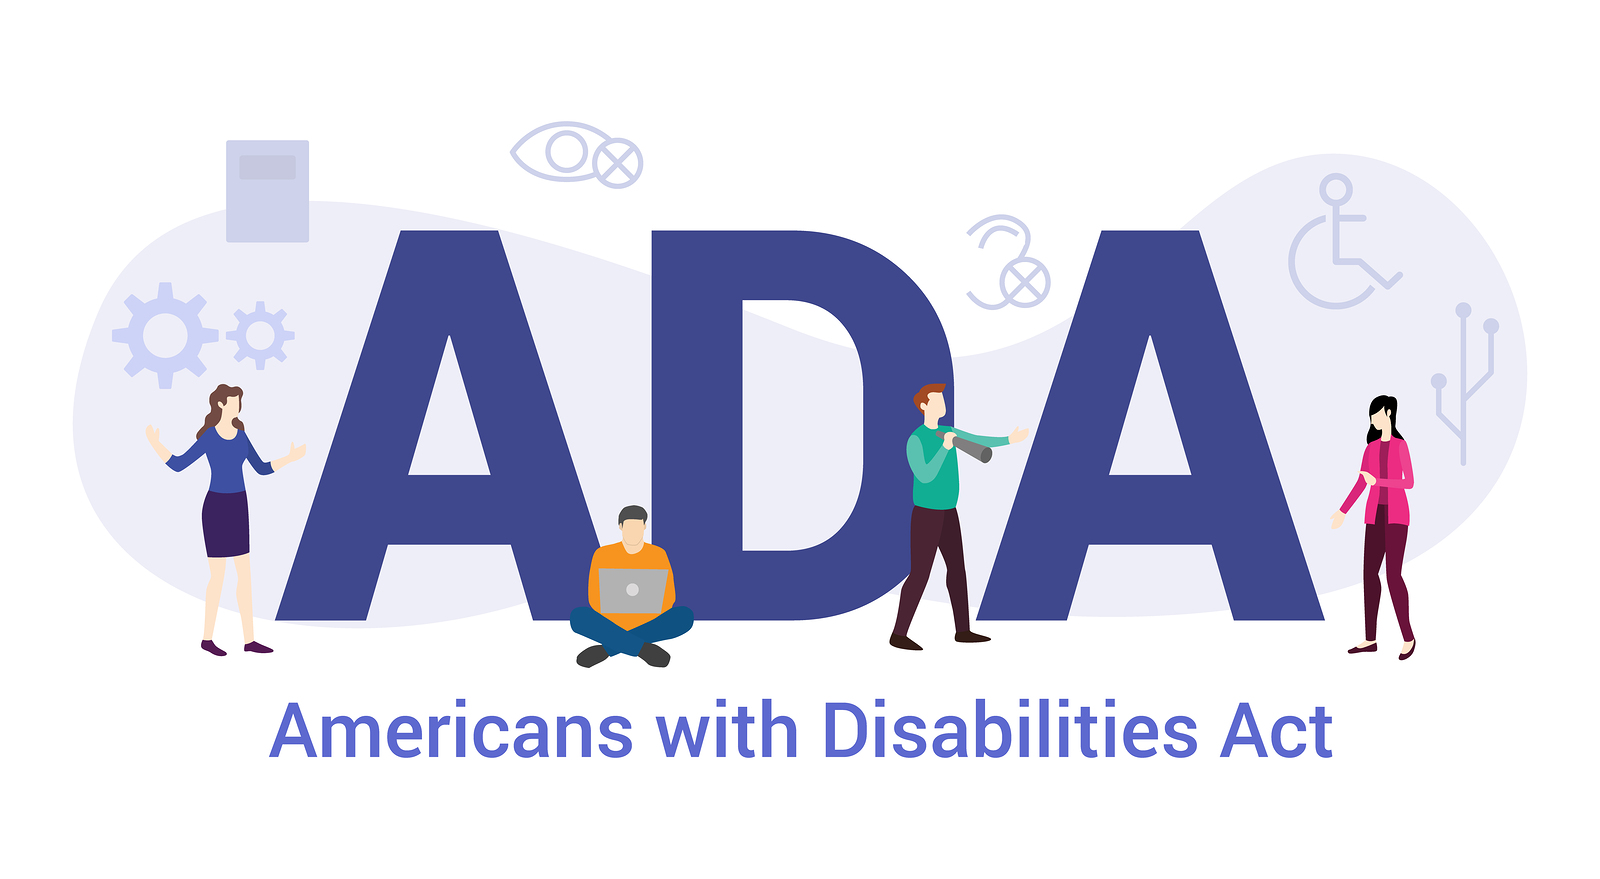 bigstock-Ada-Americans-With-Disabilitie-323556511.jpg